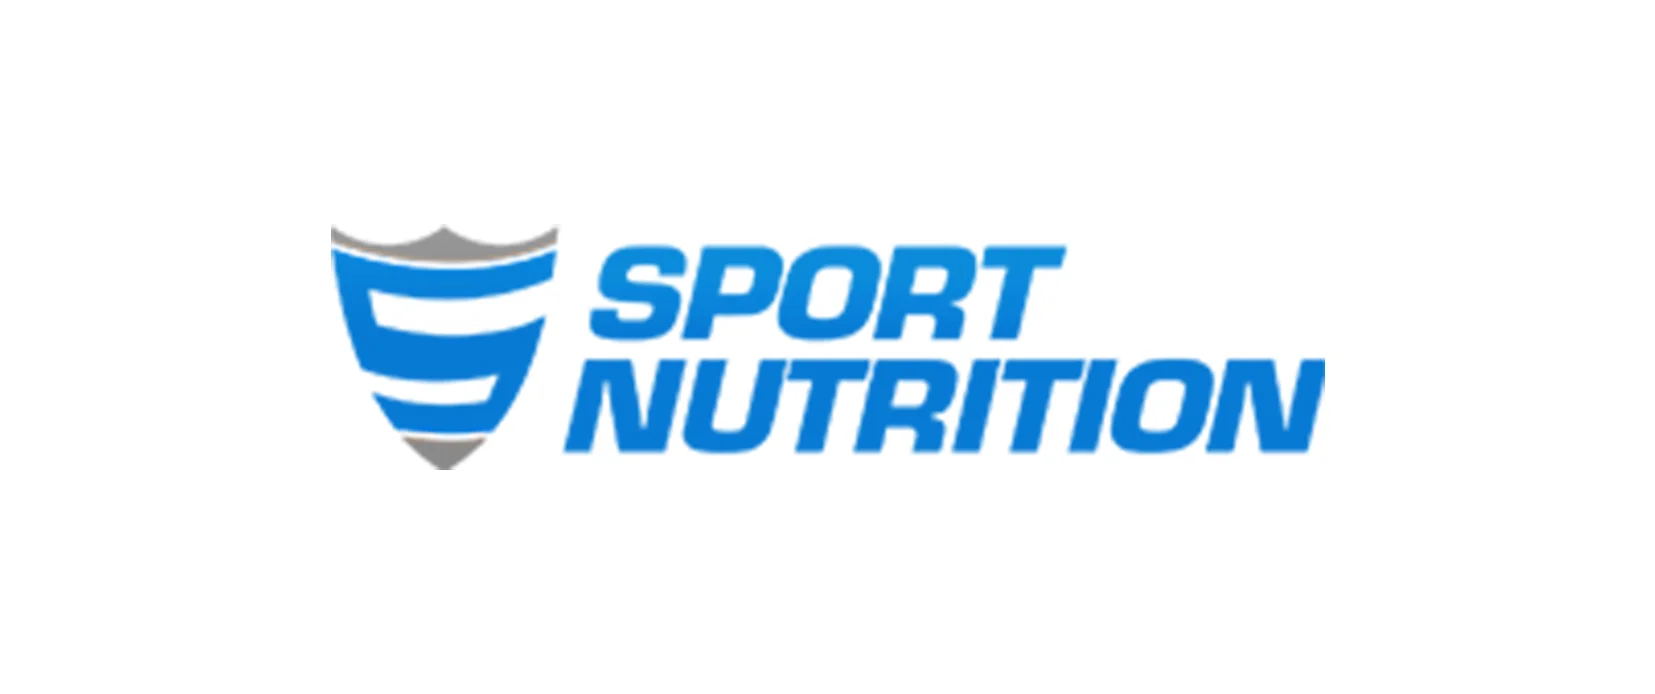 Sport-nutrition.by - интернет-магазин спортивного питания